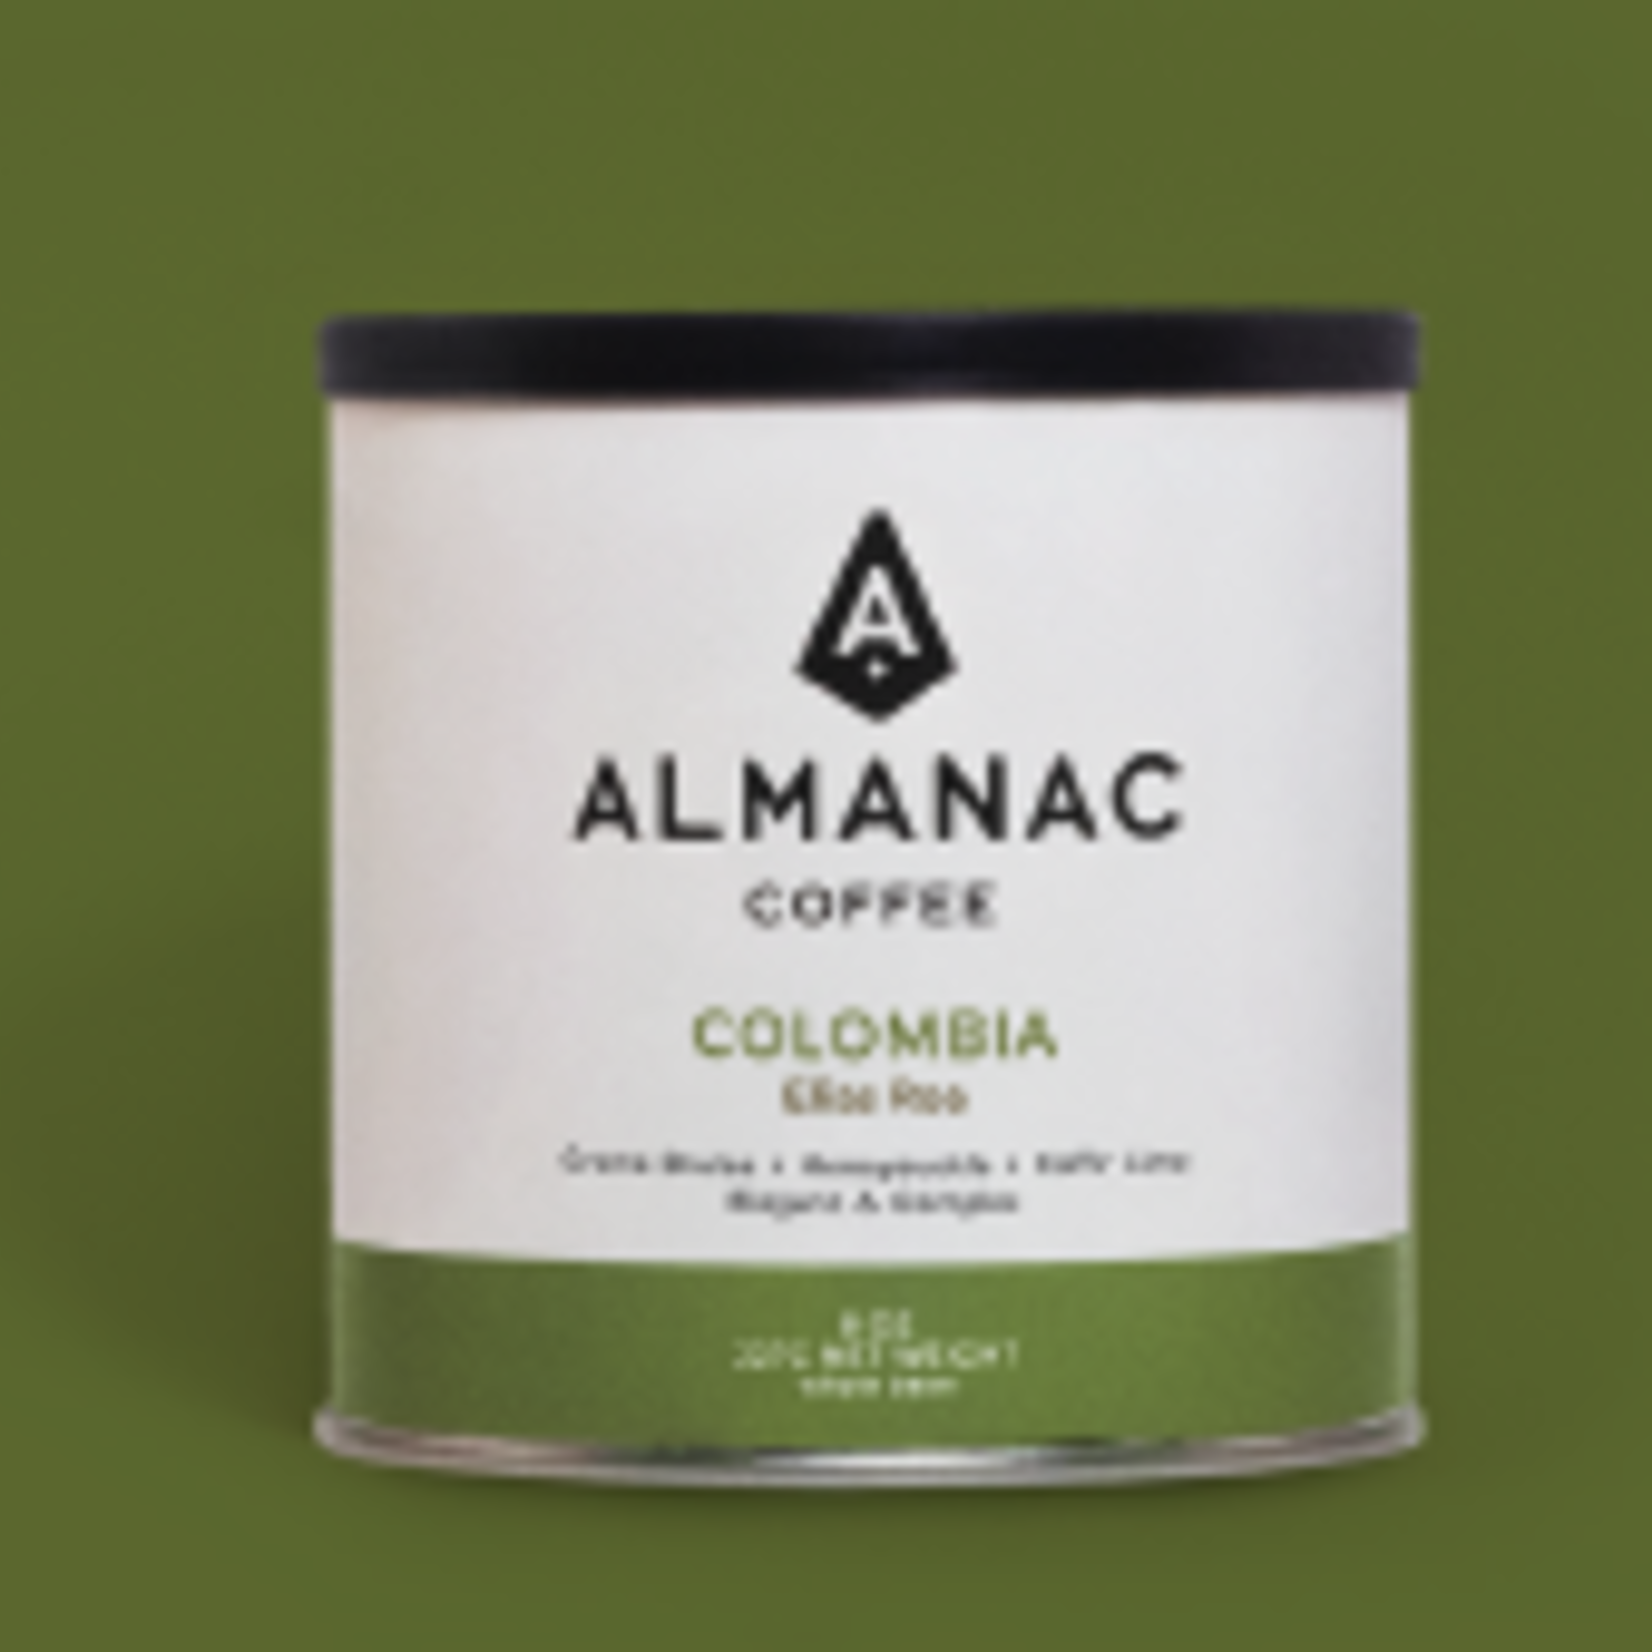 Almanac Coffee Colombia Elias Roa, Almanac Coffee - Medium/Light